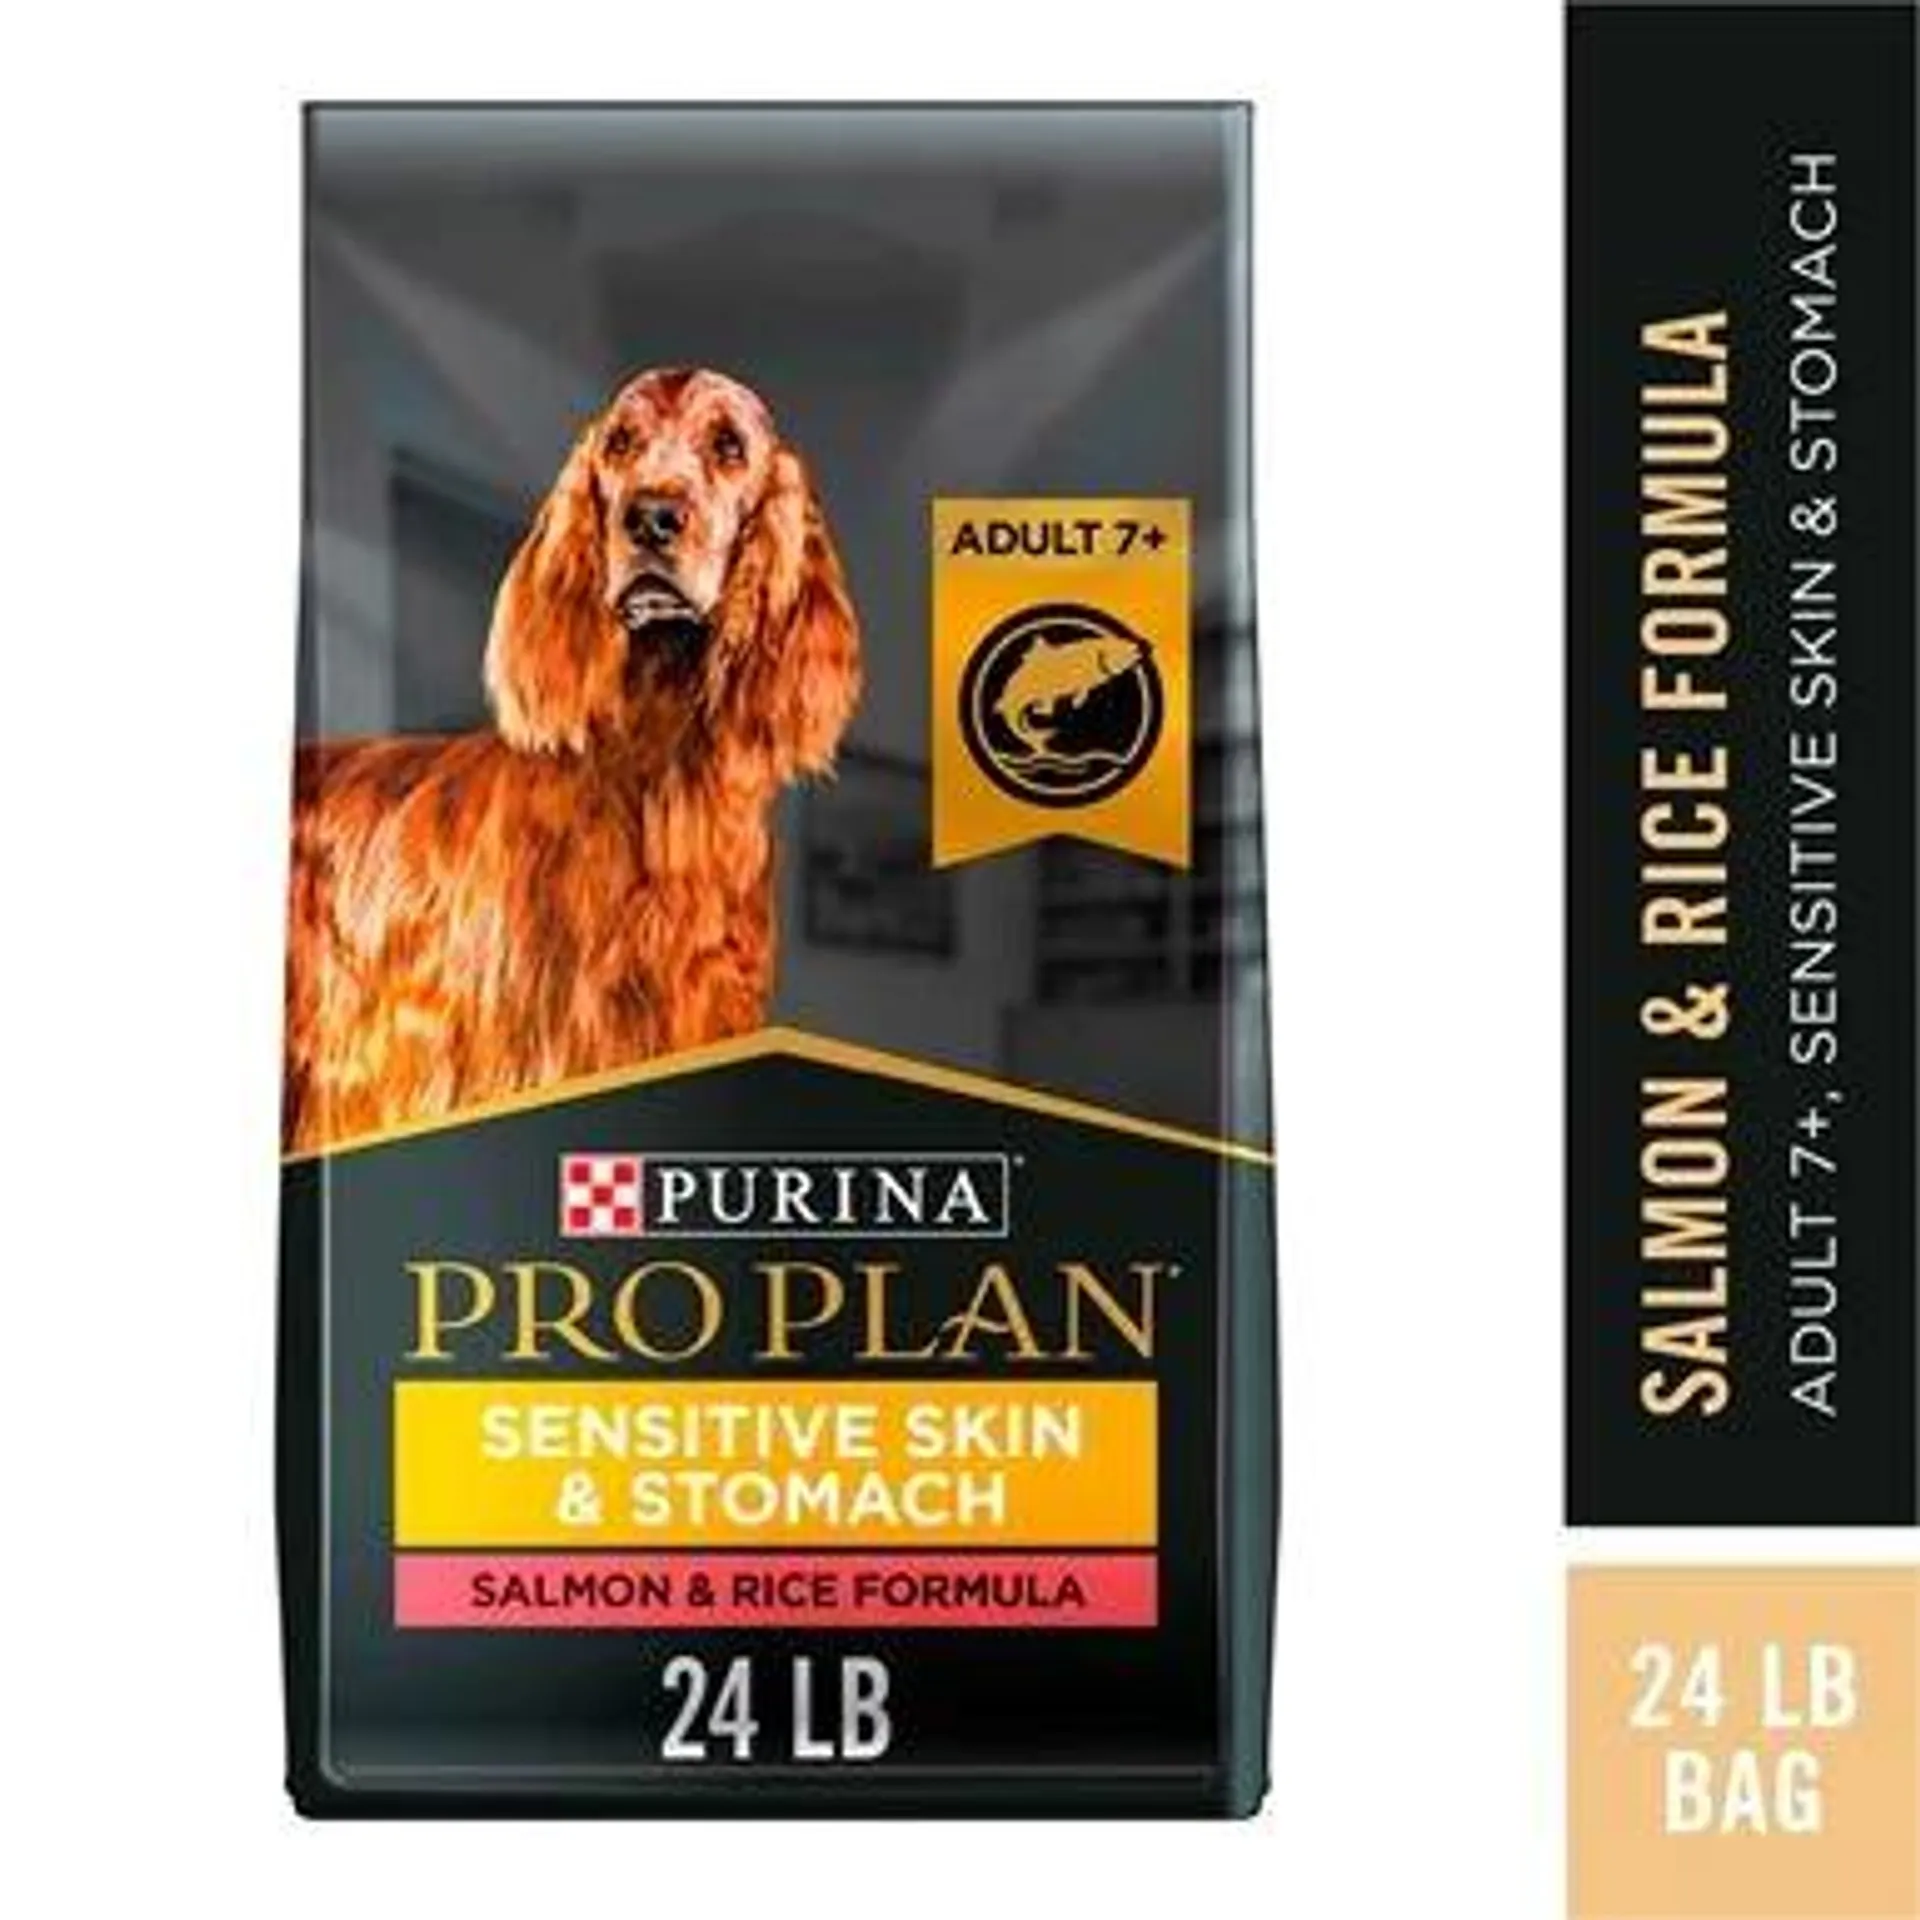 Purina Pro Plan Sensitive Skin & Stomach Dog Food, Dry Dog Food for SENIOR Dogs Adult 7+ Salmon & Rice Formula - 24 Pound Bag